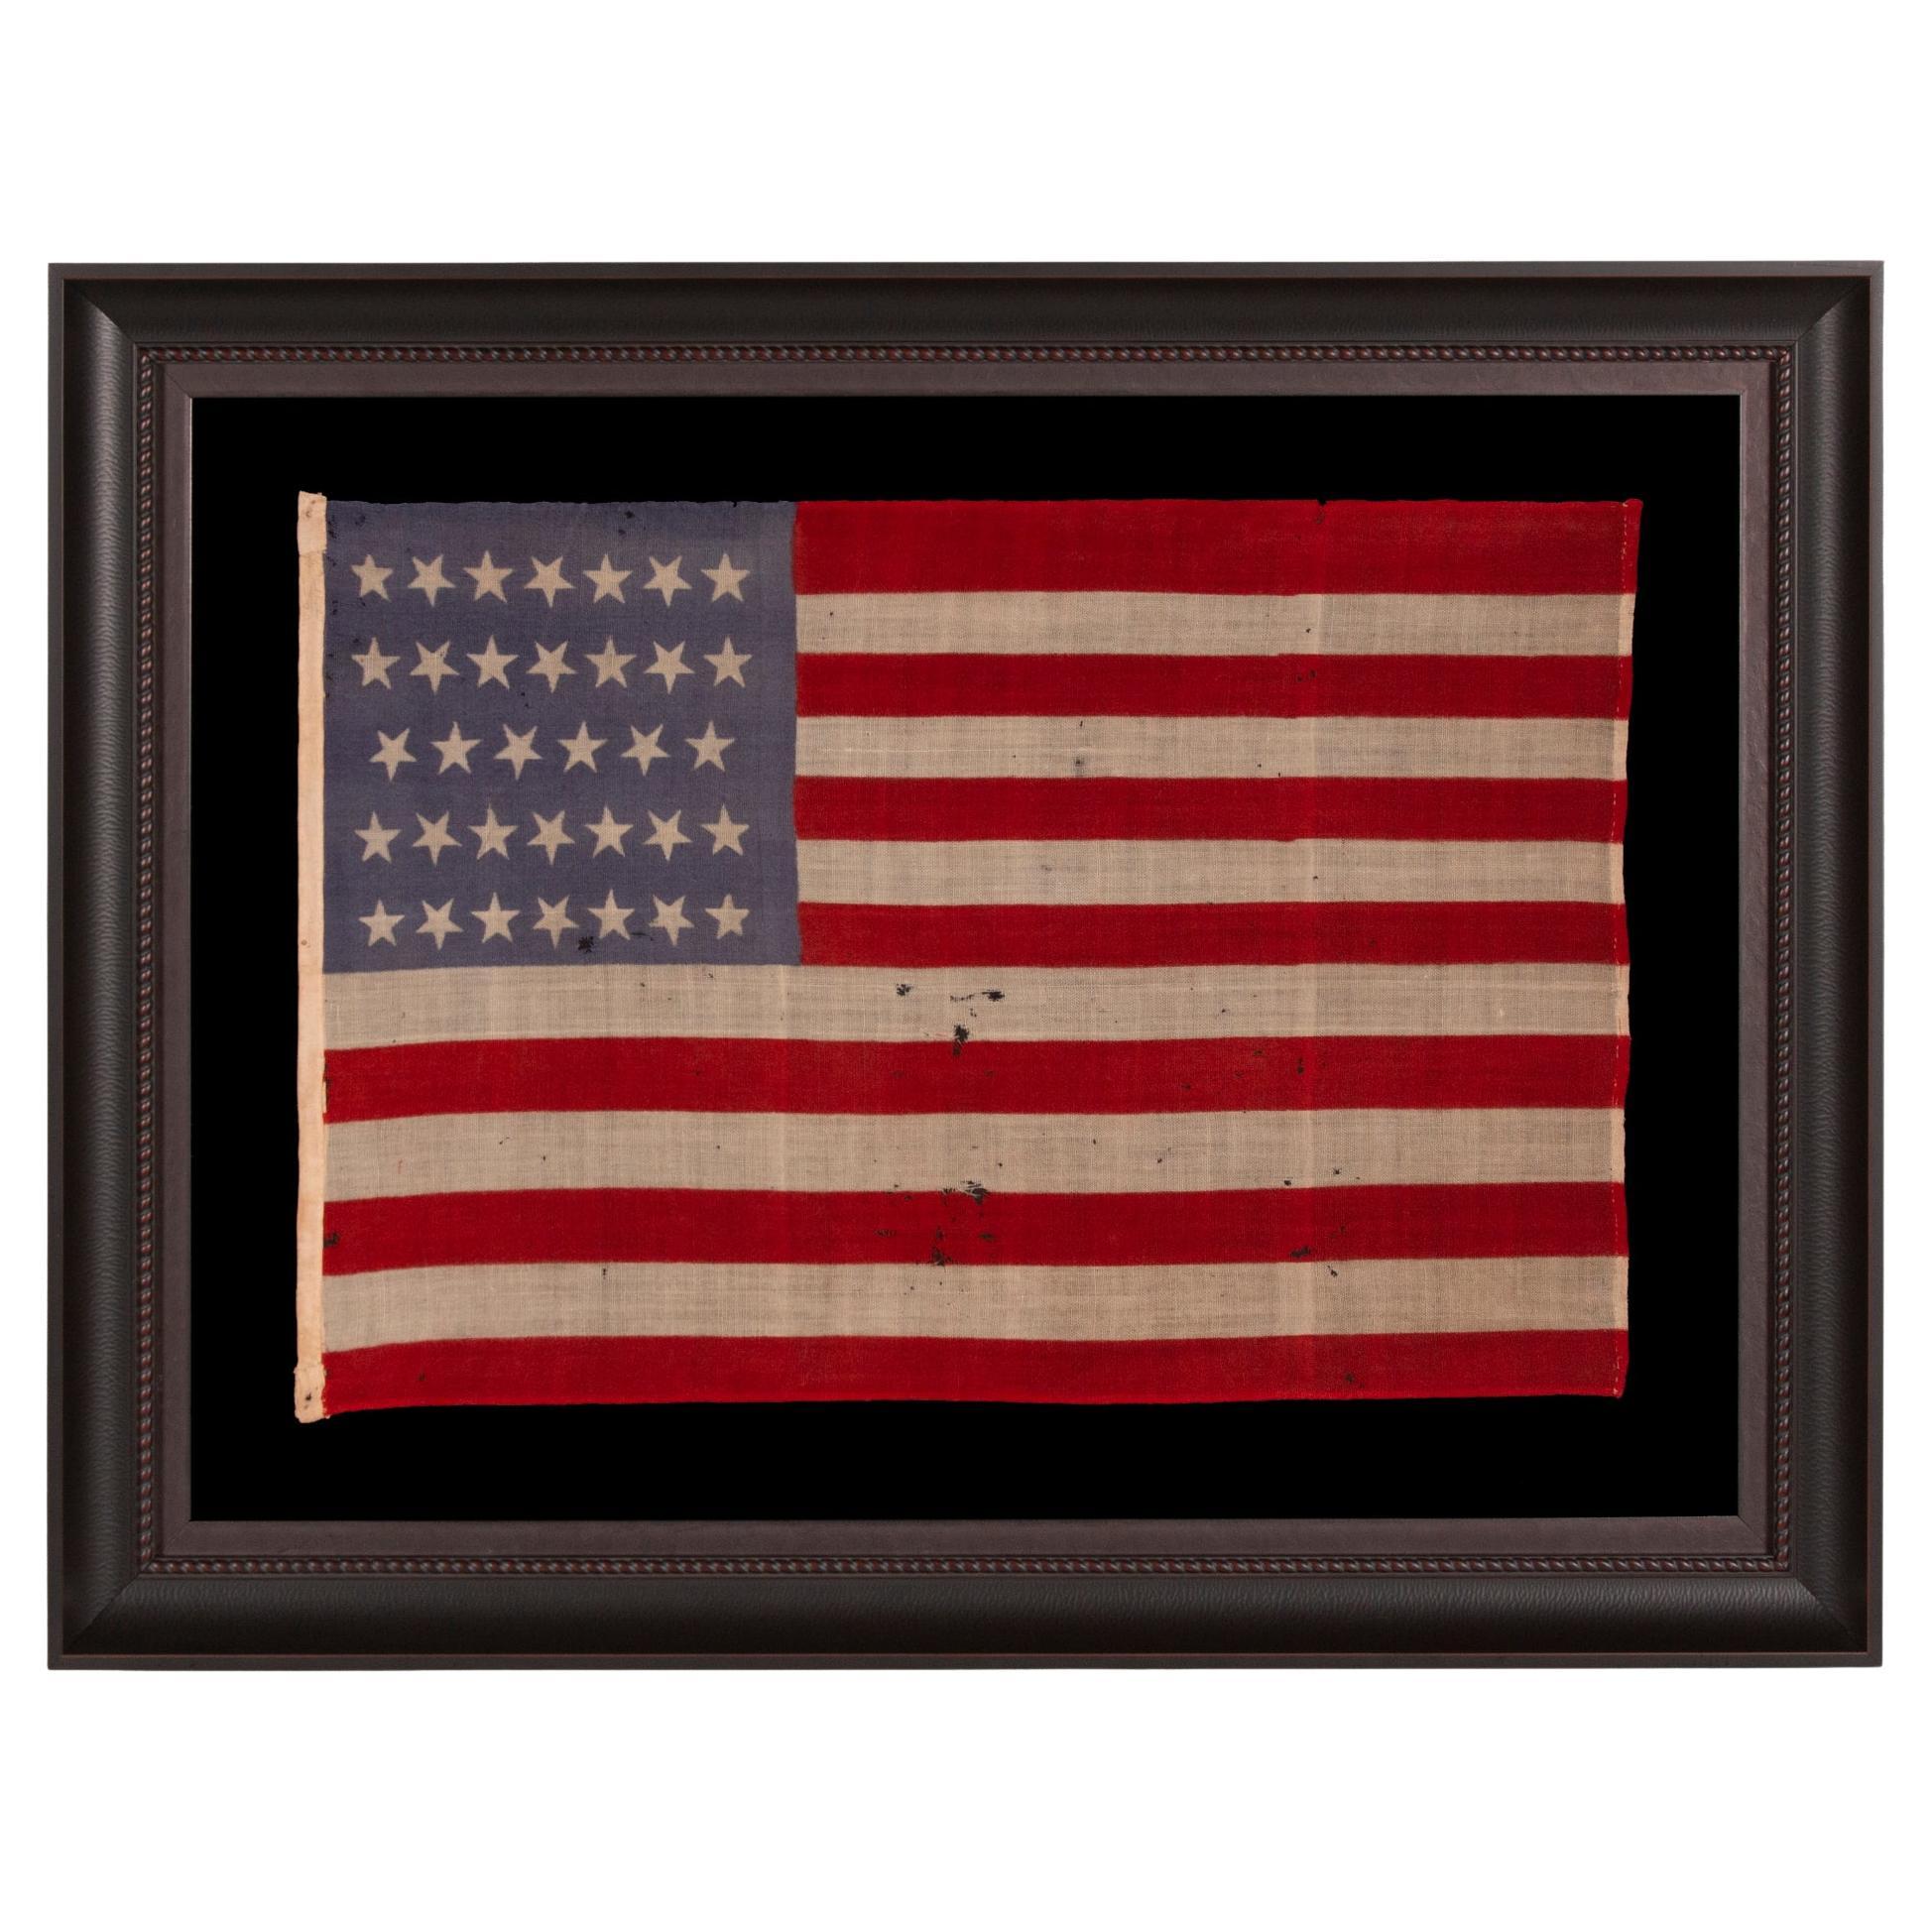 34 TUMBLING STARS on an ANTIQUE AMERICAN FLAG, CIVIL WAR PERIOD, 1861-63, KANSAS For Sale